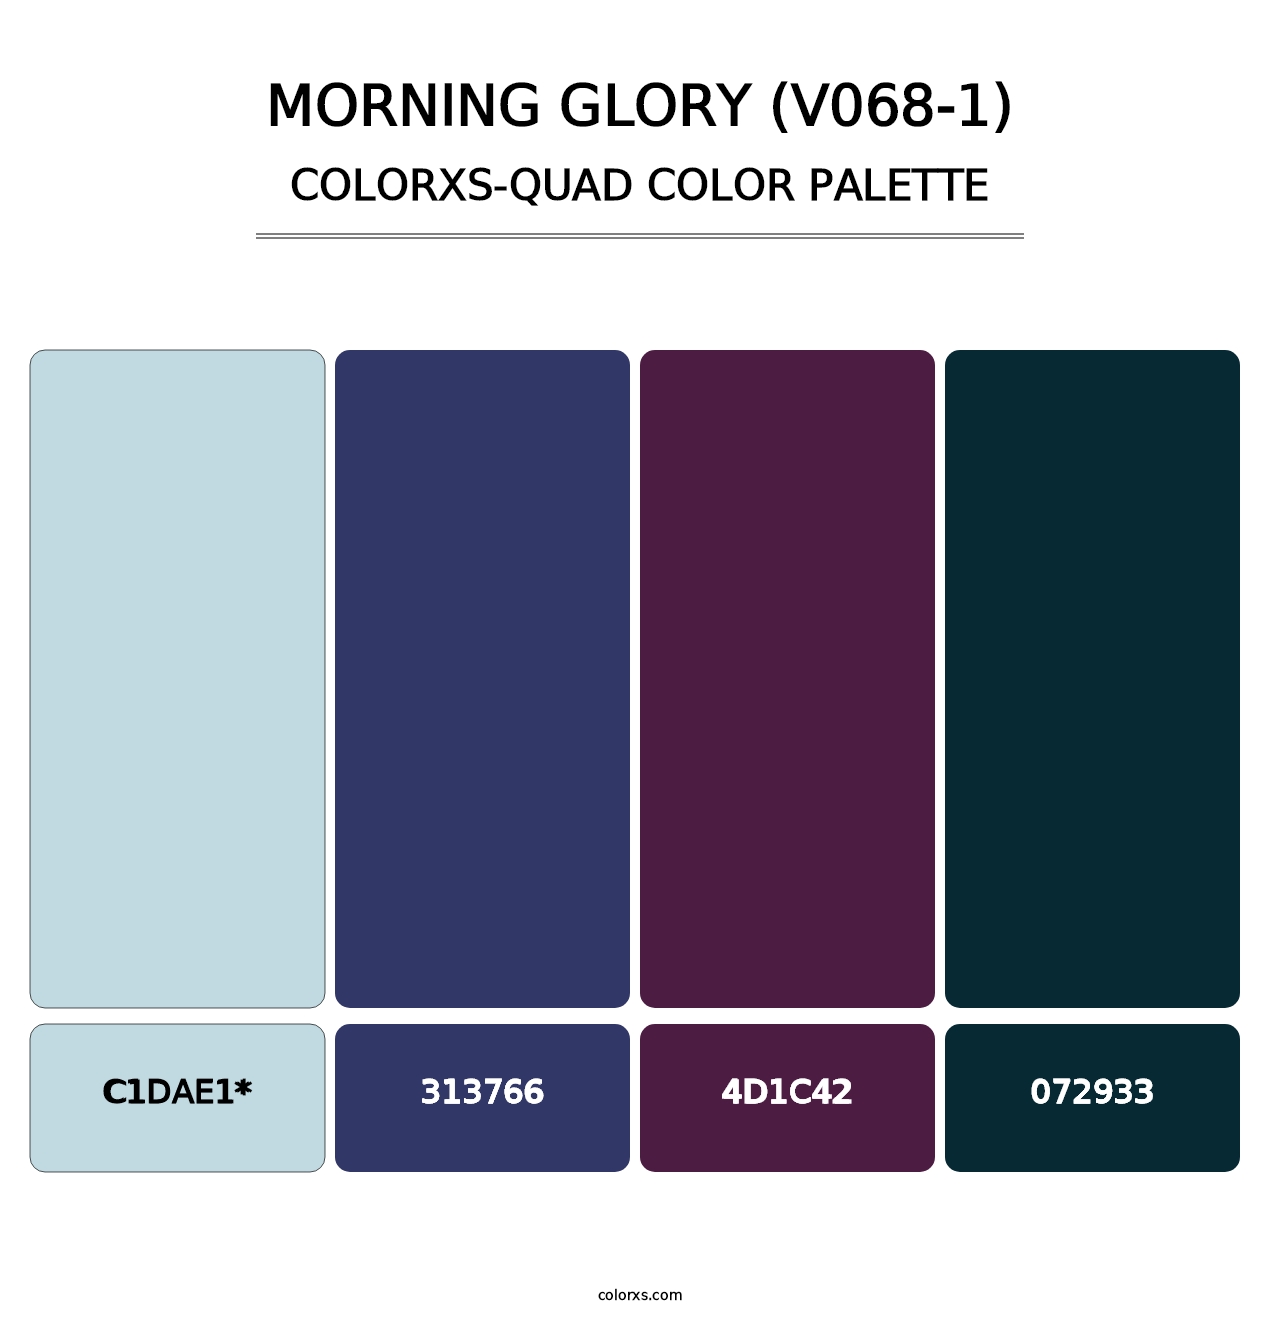 Morning Glory (V068-1) - Colorxs Quad Palette